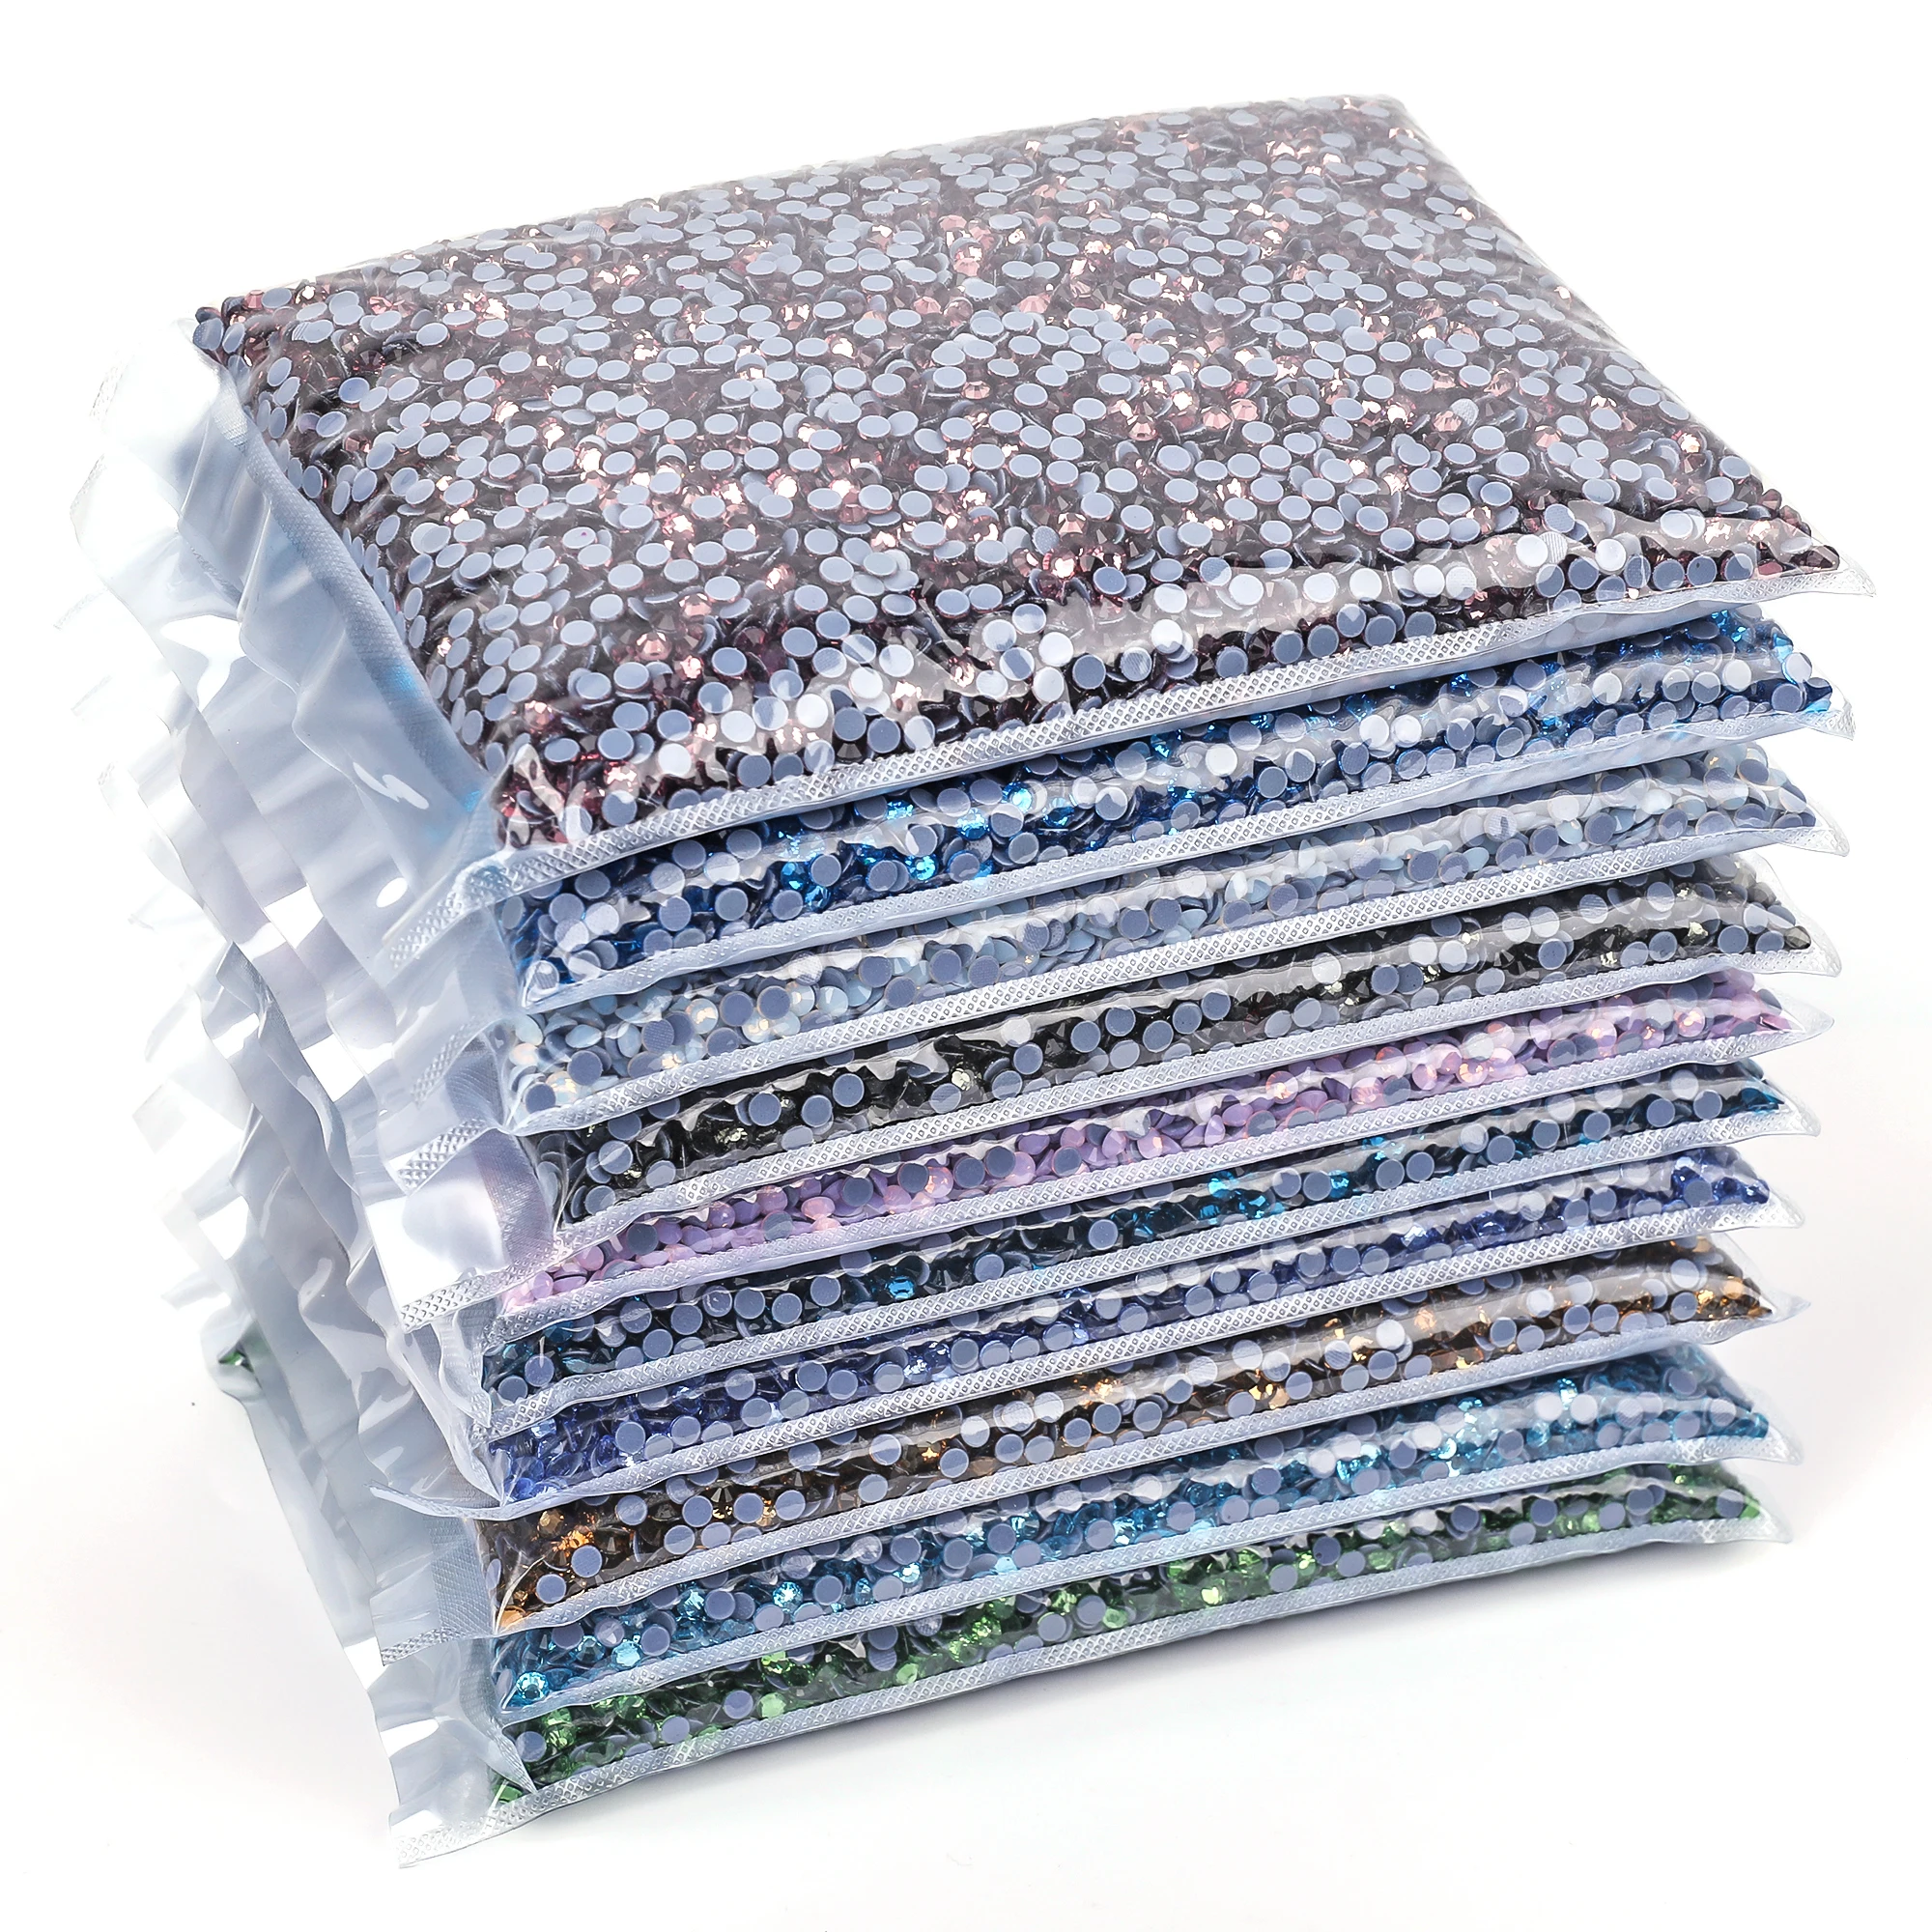 

Big Bulk Bag All Colors Wholesale Top Quality Better DMC Hotfix Rhinestones SS6-SS30 Crystal Hot Fix Rhinestone Garment